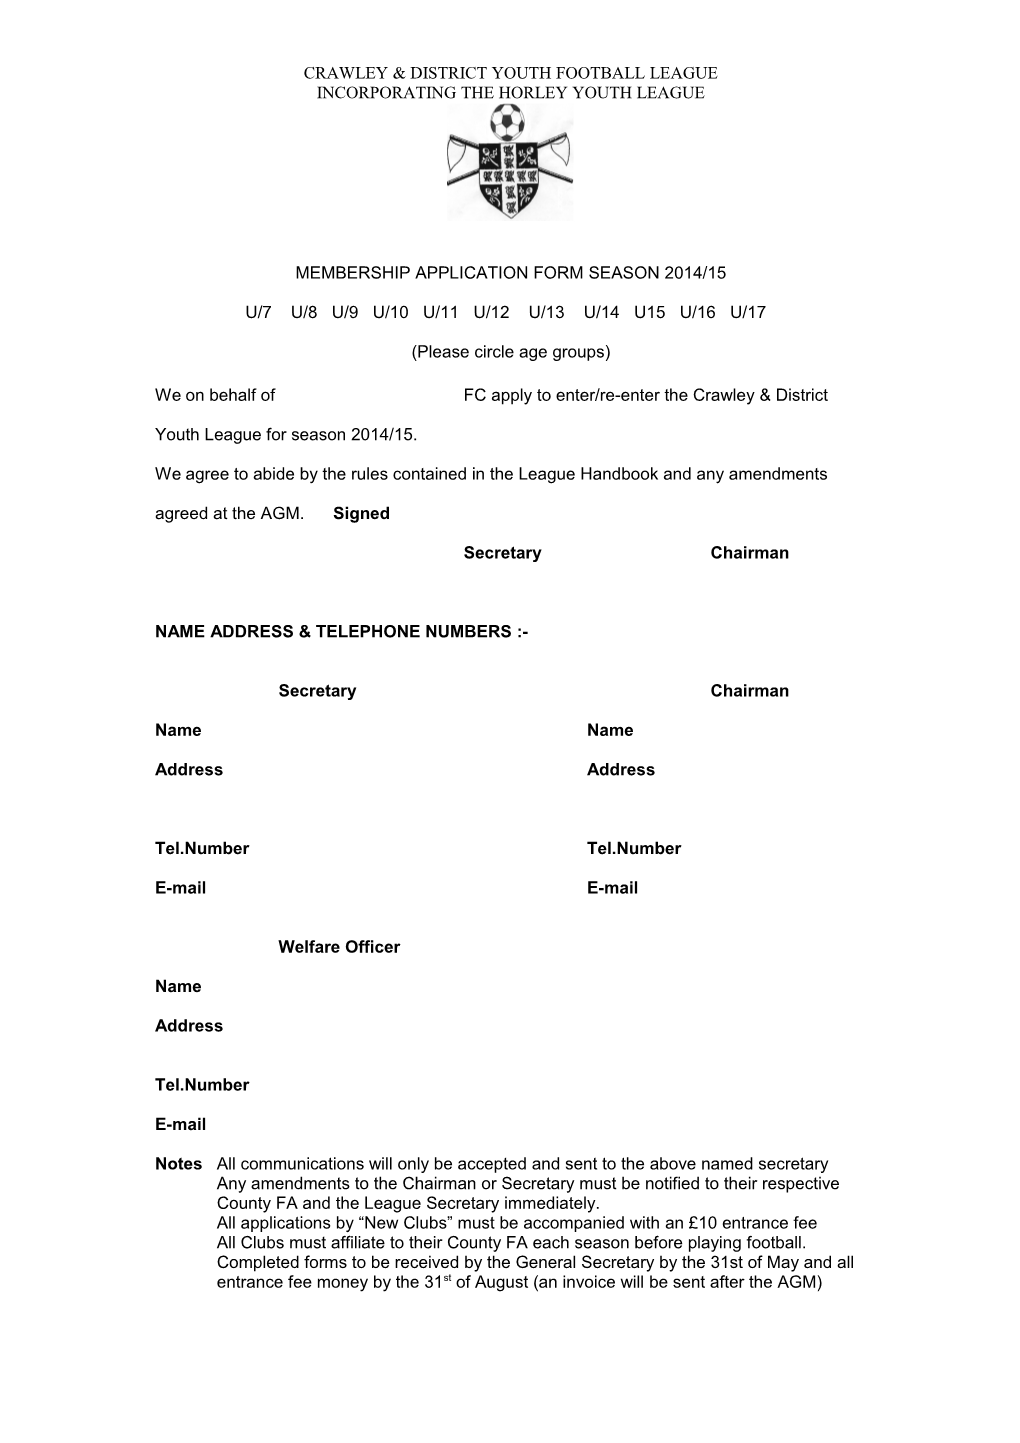 Membership Application Form Season 2005/06